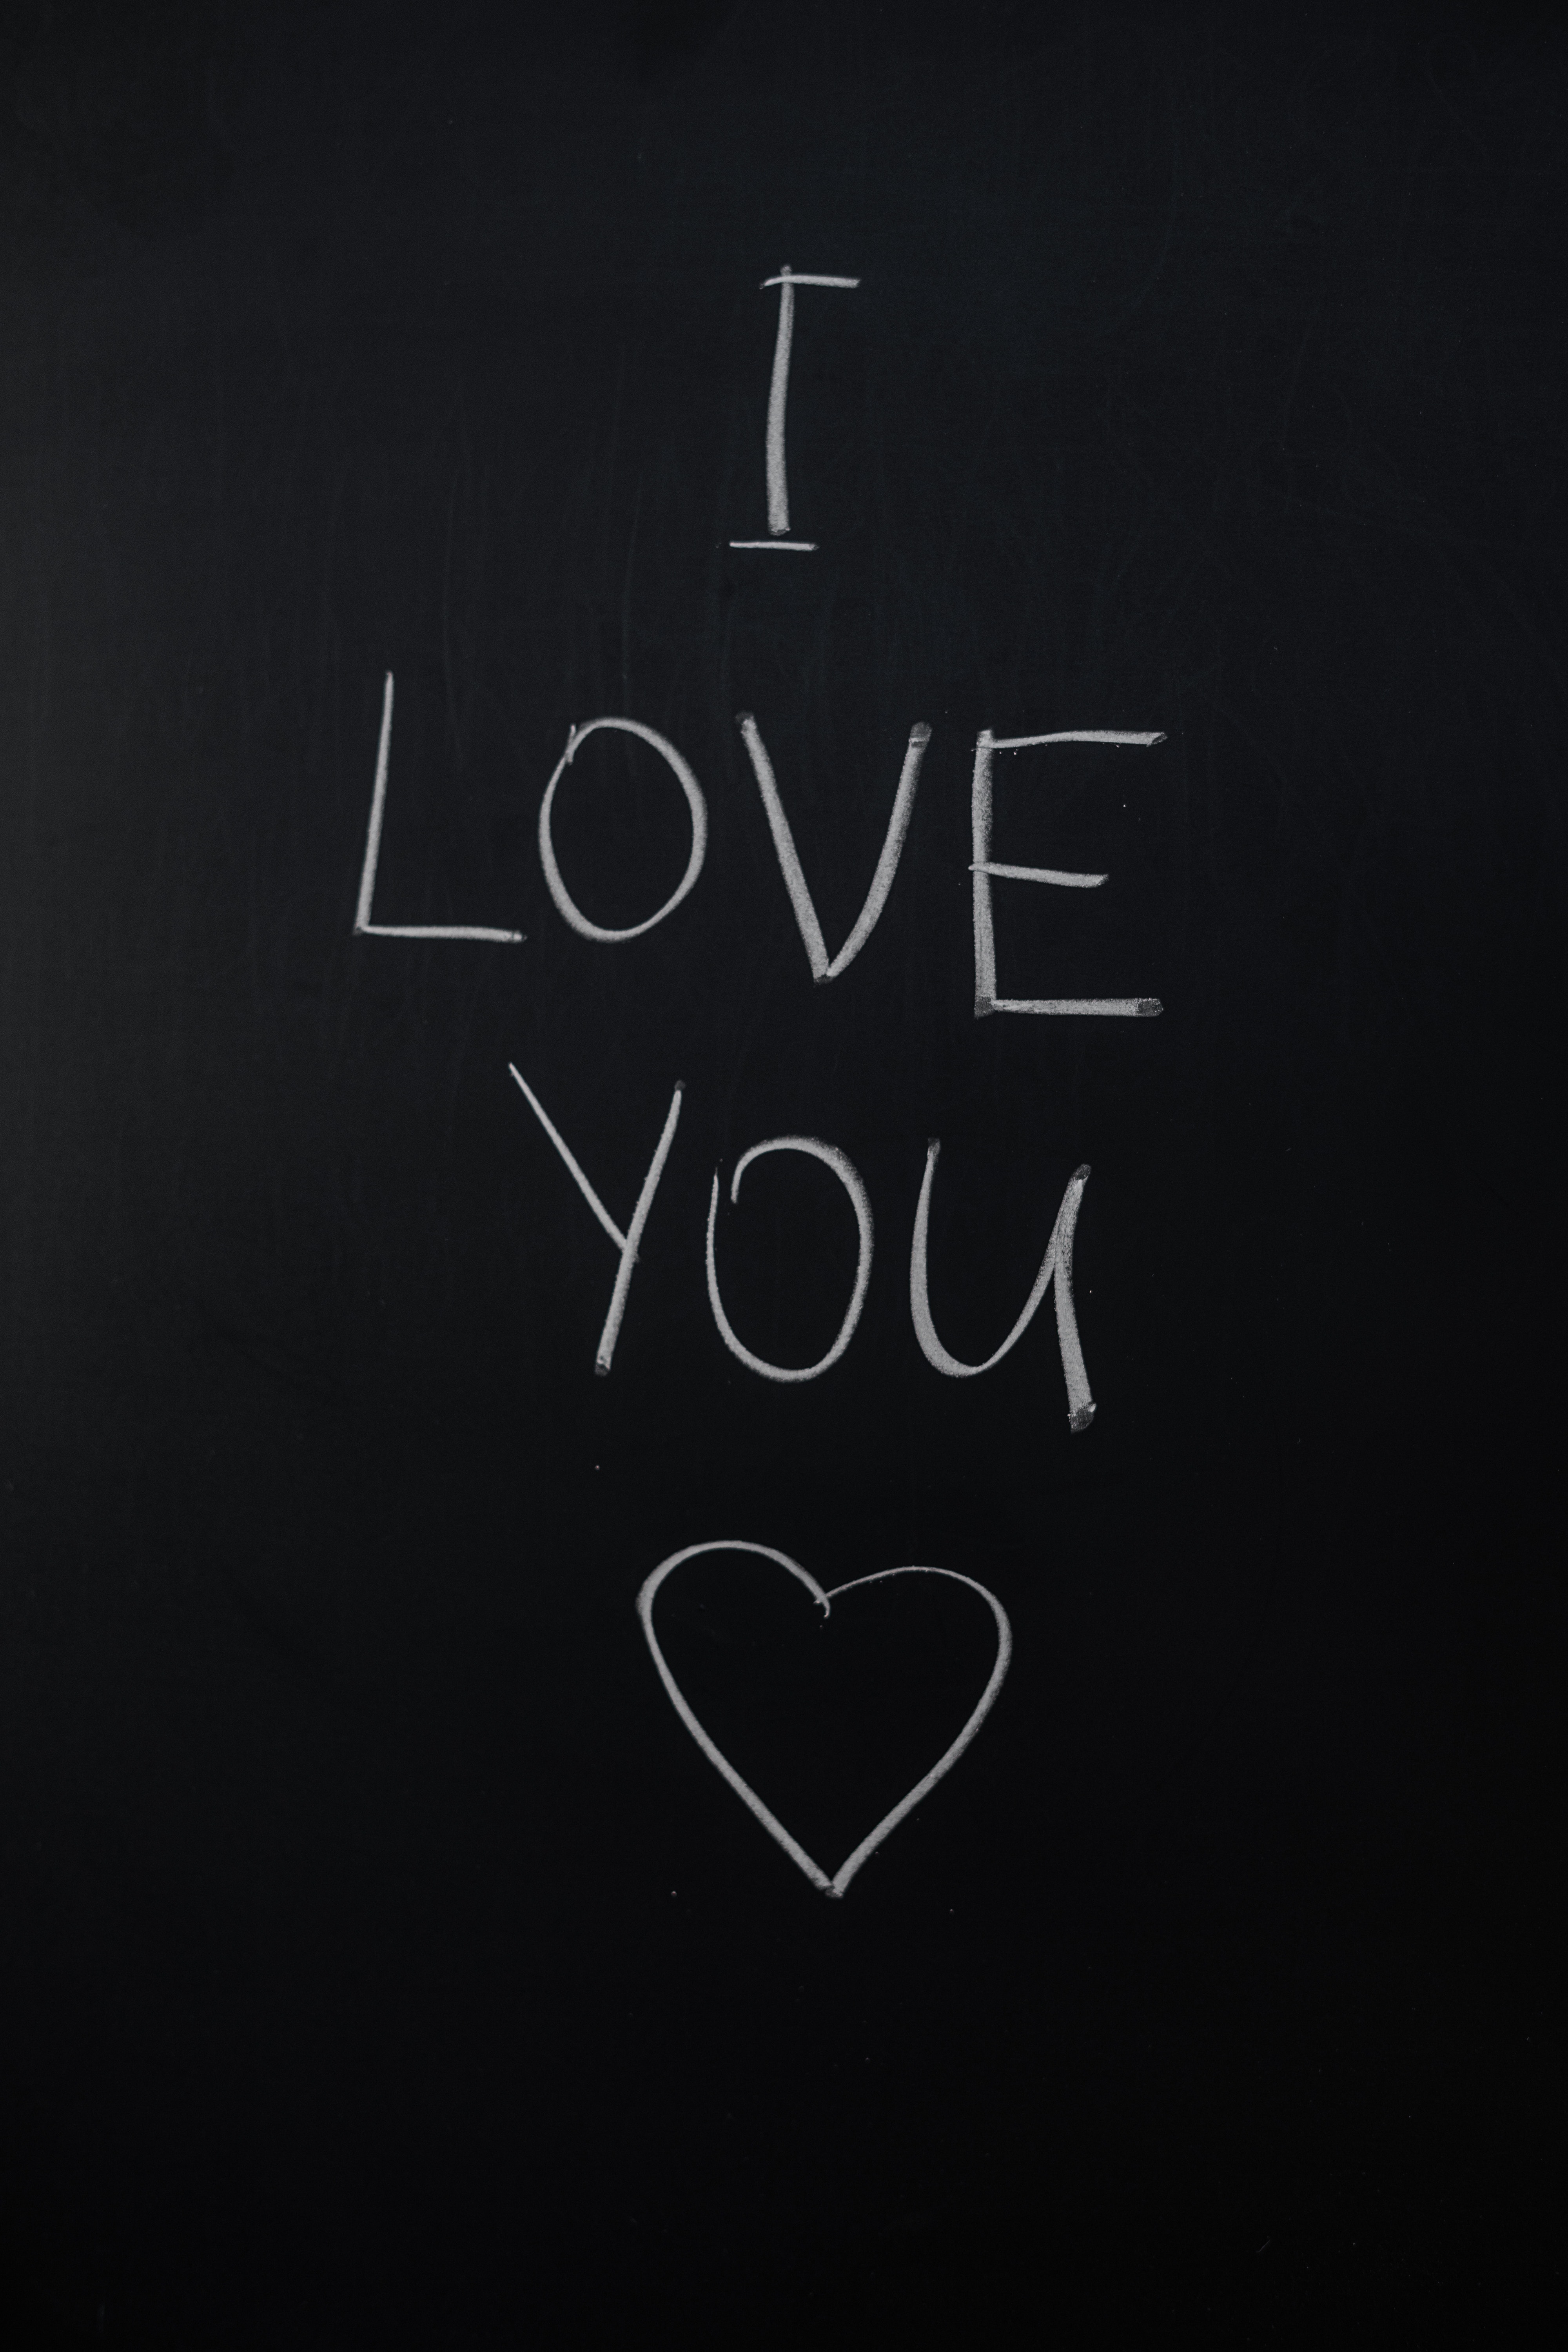 L Love You on Black Board | I Love You